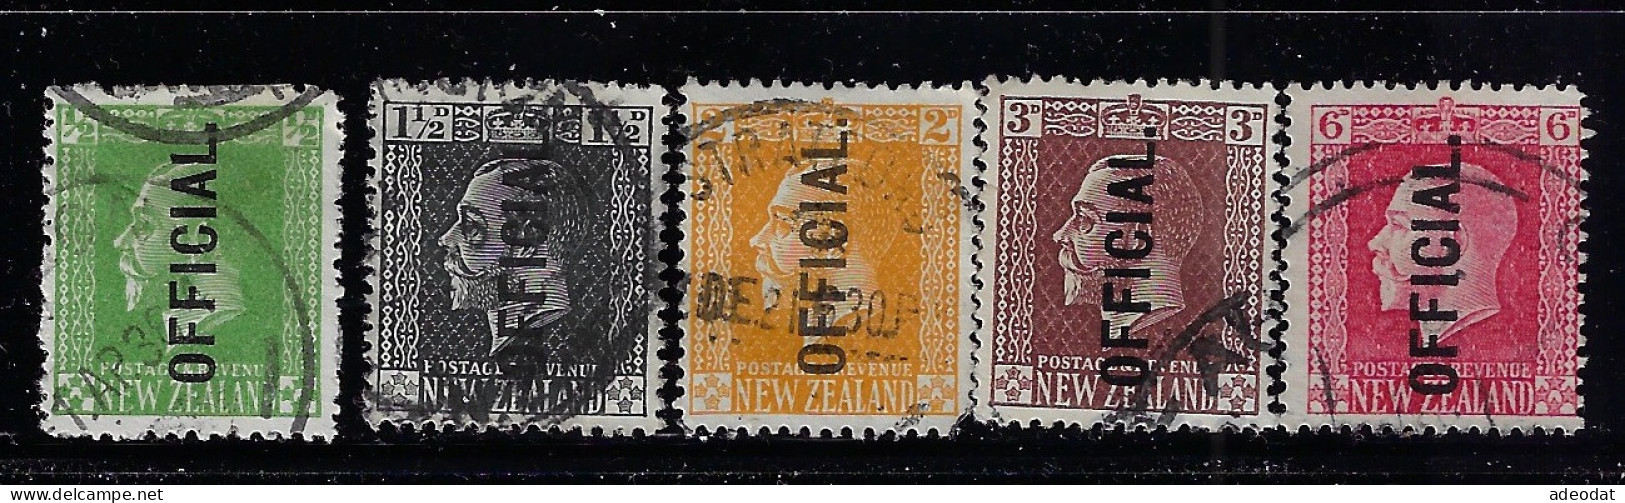 NEW ZEALAND 1915 0FFICIAL STAMPS  SCOTT #O41,O43,O45,O46,O48 USED - Dienstmarken